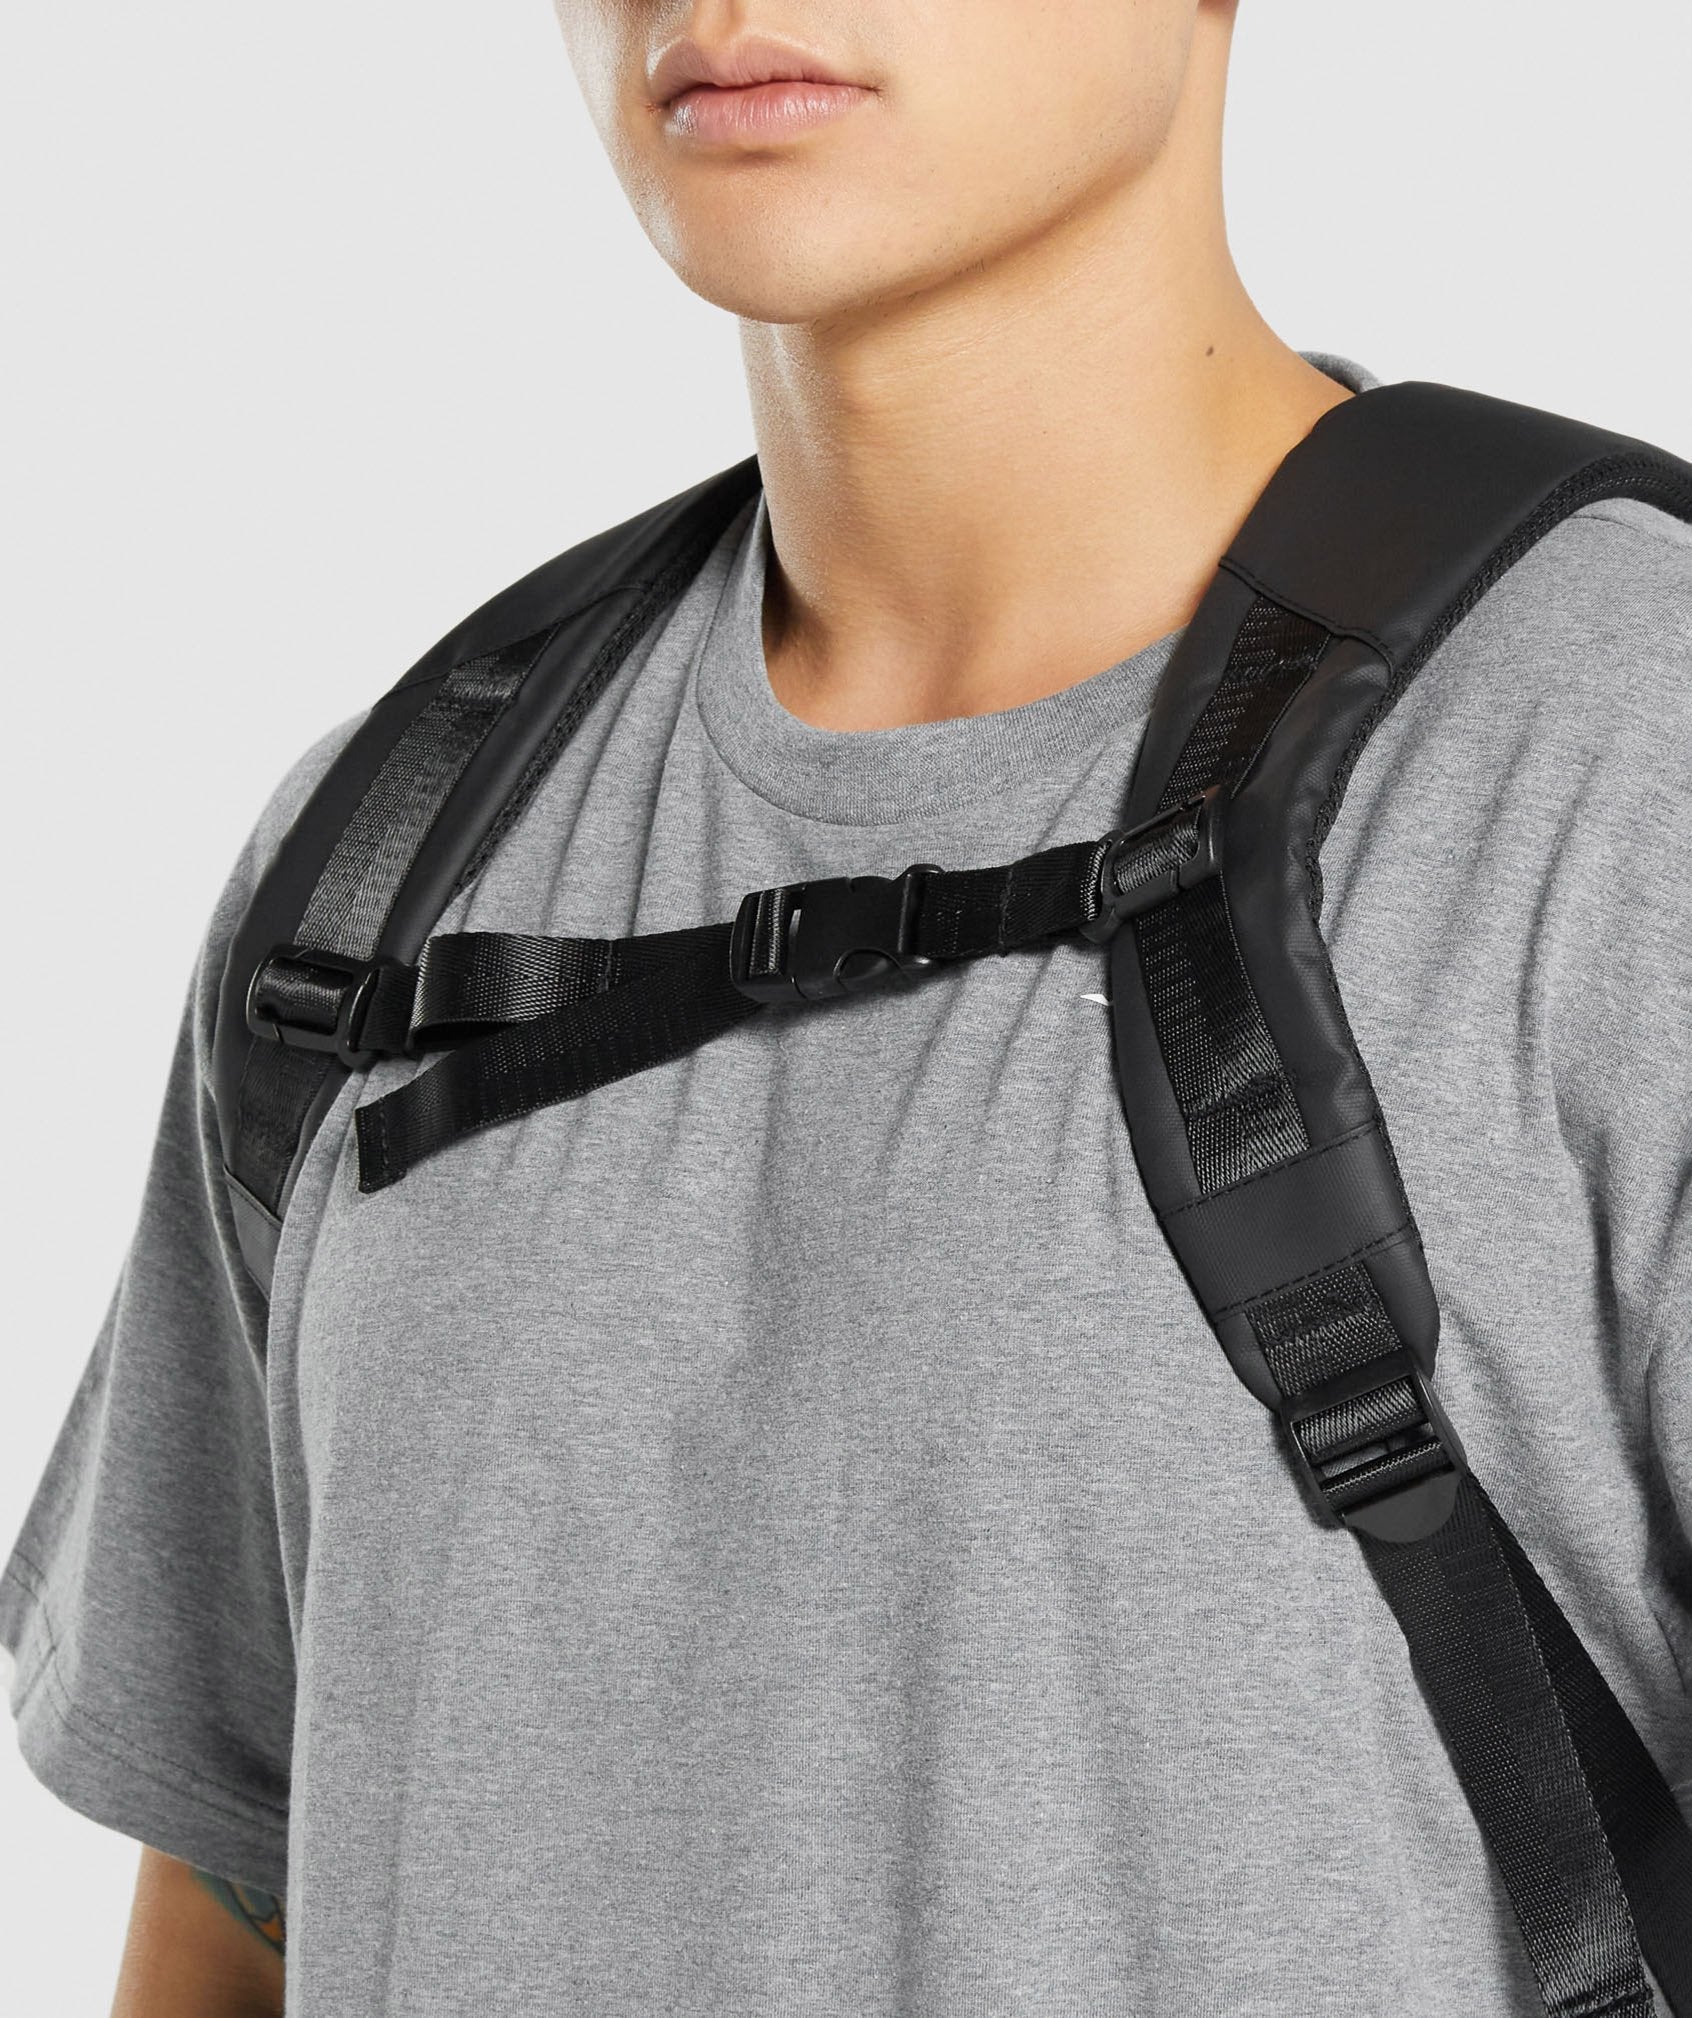 X-Series 0.1 Backpack in Black - view 2